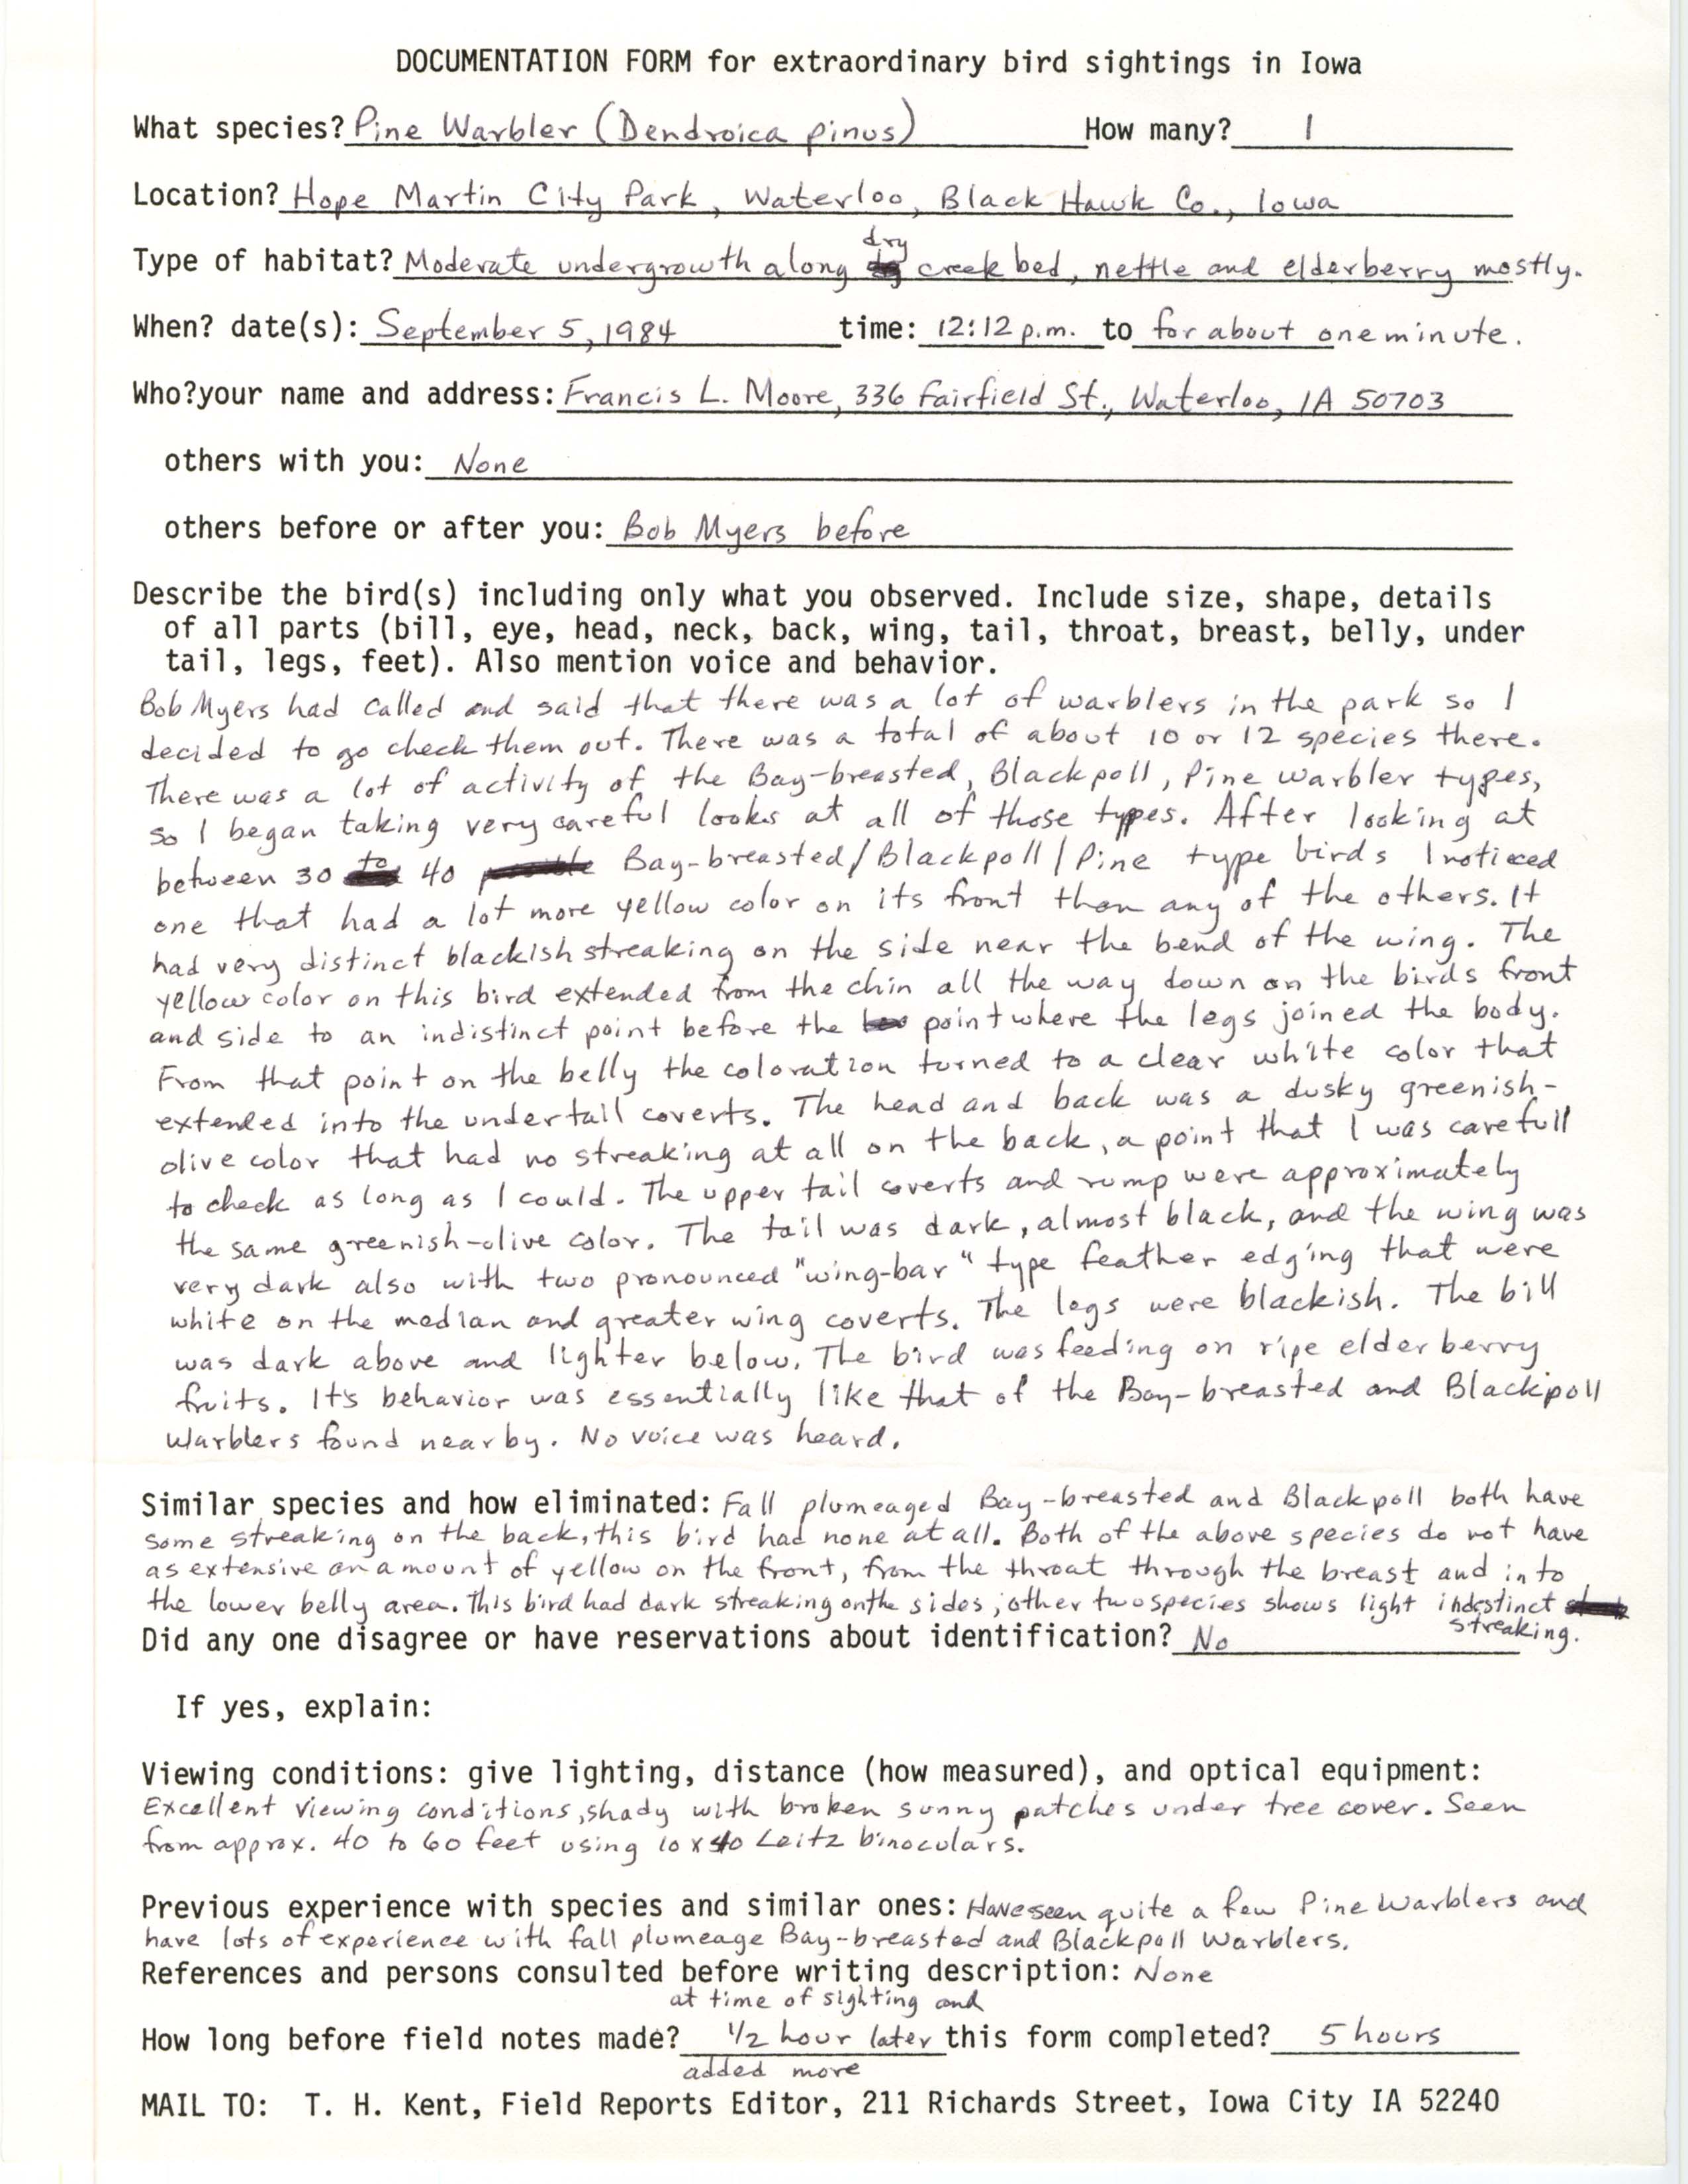 Rare bird documentation form for Pine Warbler at Hope Martin Memorial Park in Waterloo, 1984